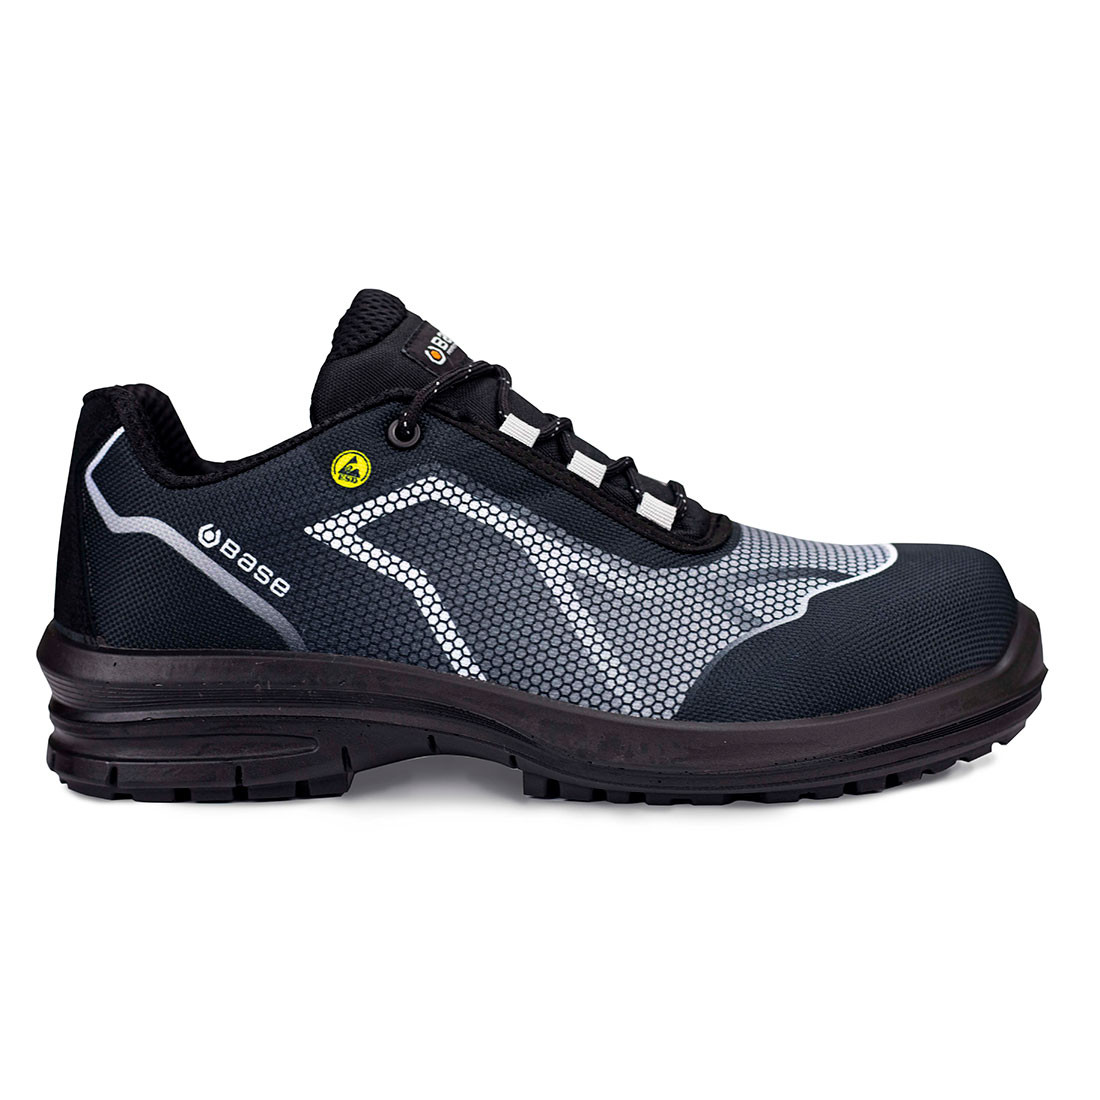 Pantofi OREN ESD S3 - Incaltaminte de protectie | Bocanci, Pantofi, Sandale, Cizme